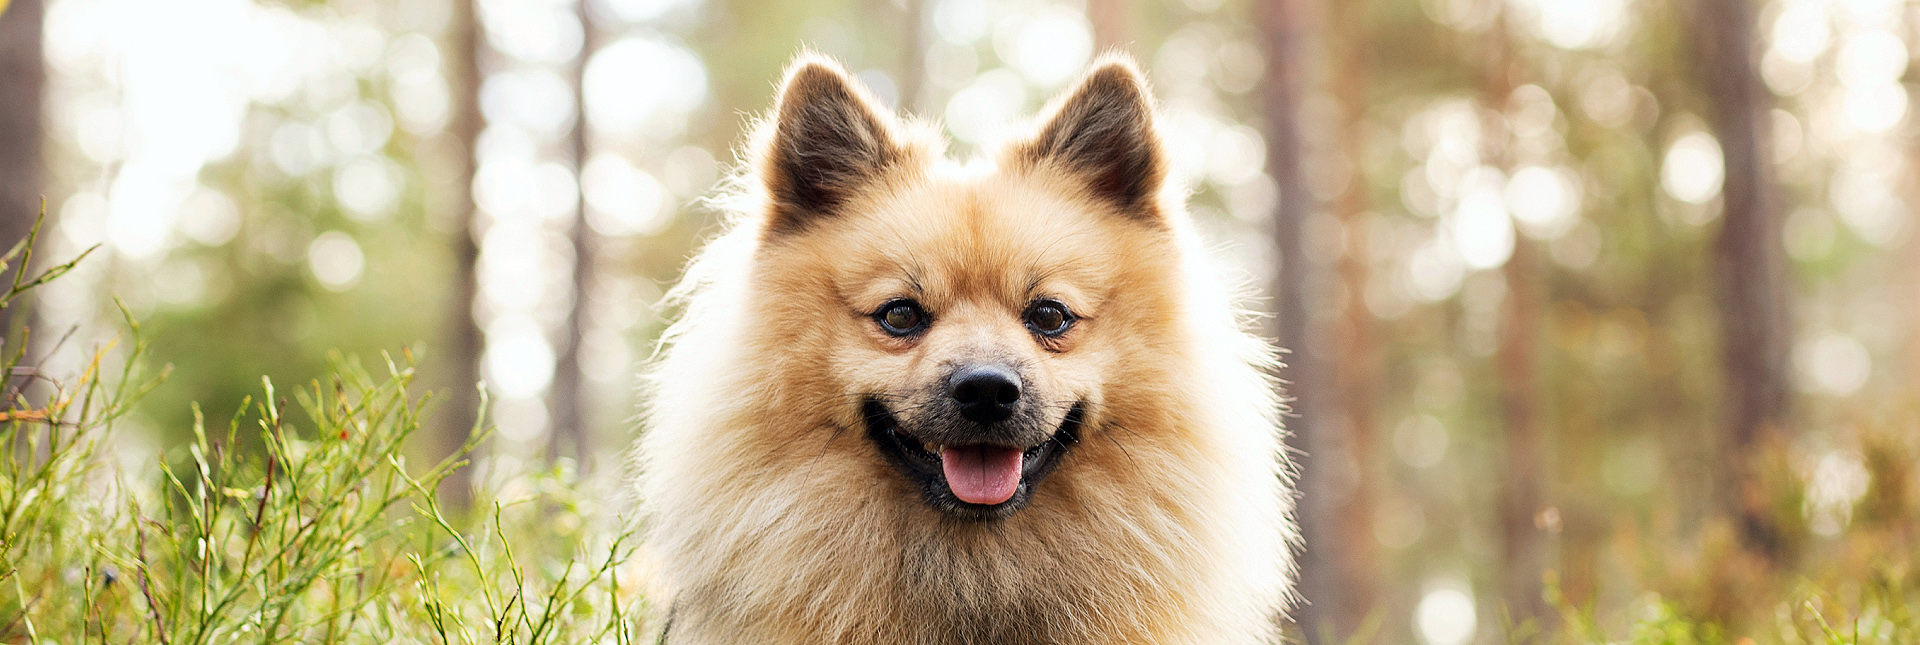 Alvar dog smiling in the forest